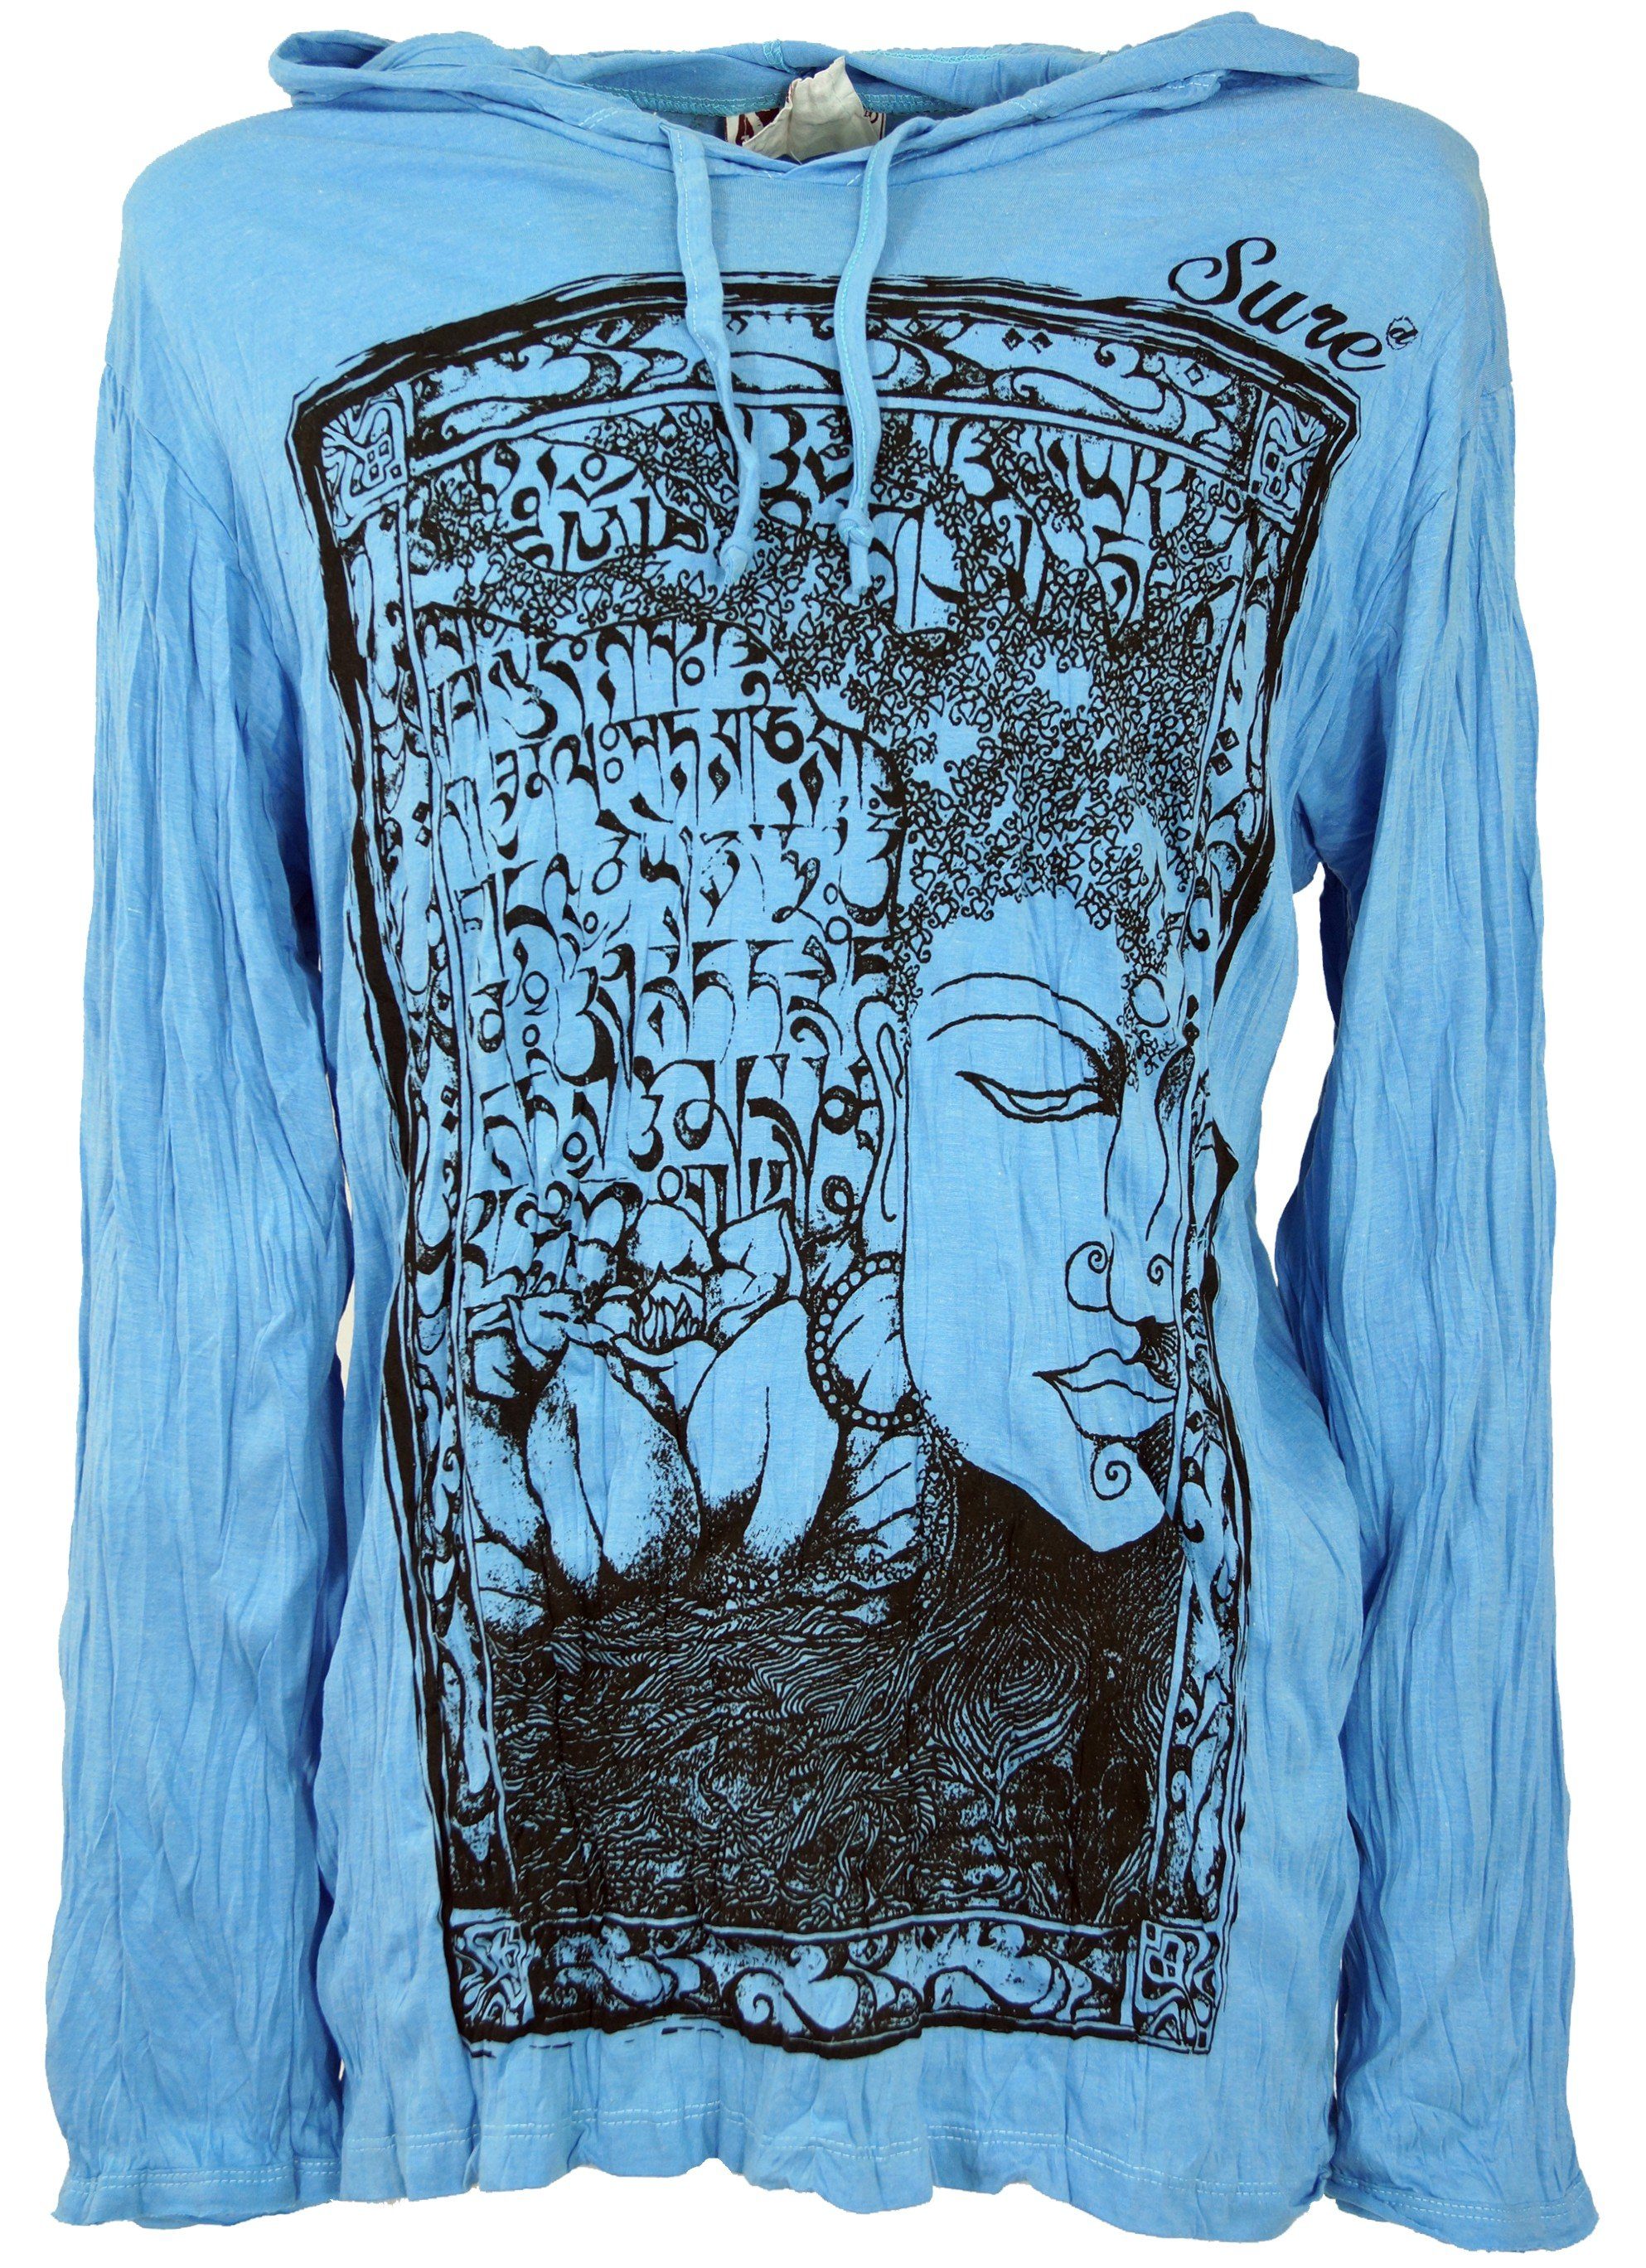 Guru-Shop T-Shirt Sure Langarmshirt, Kapuzenshirt Mantra Buddha -.. Goa Style, Festival, alternative Bekleidung hellblau | T-Shirts